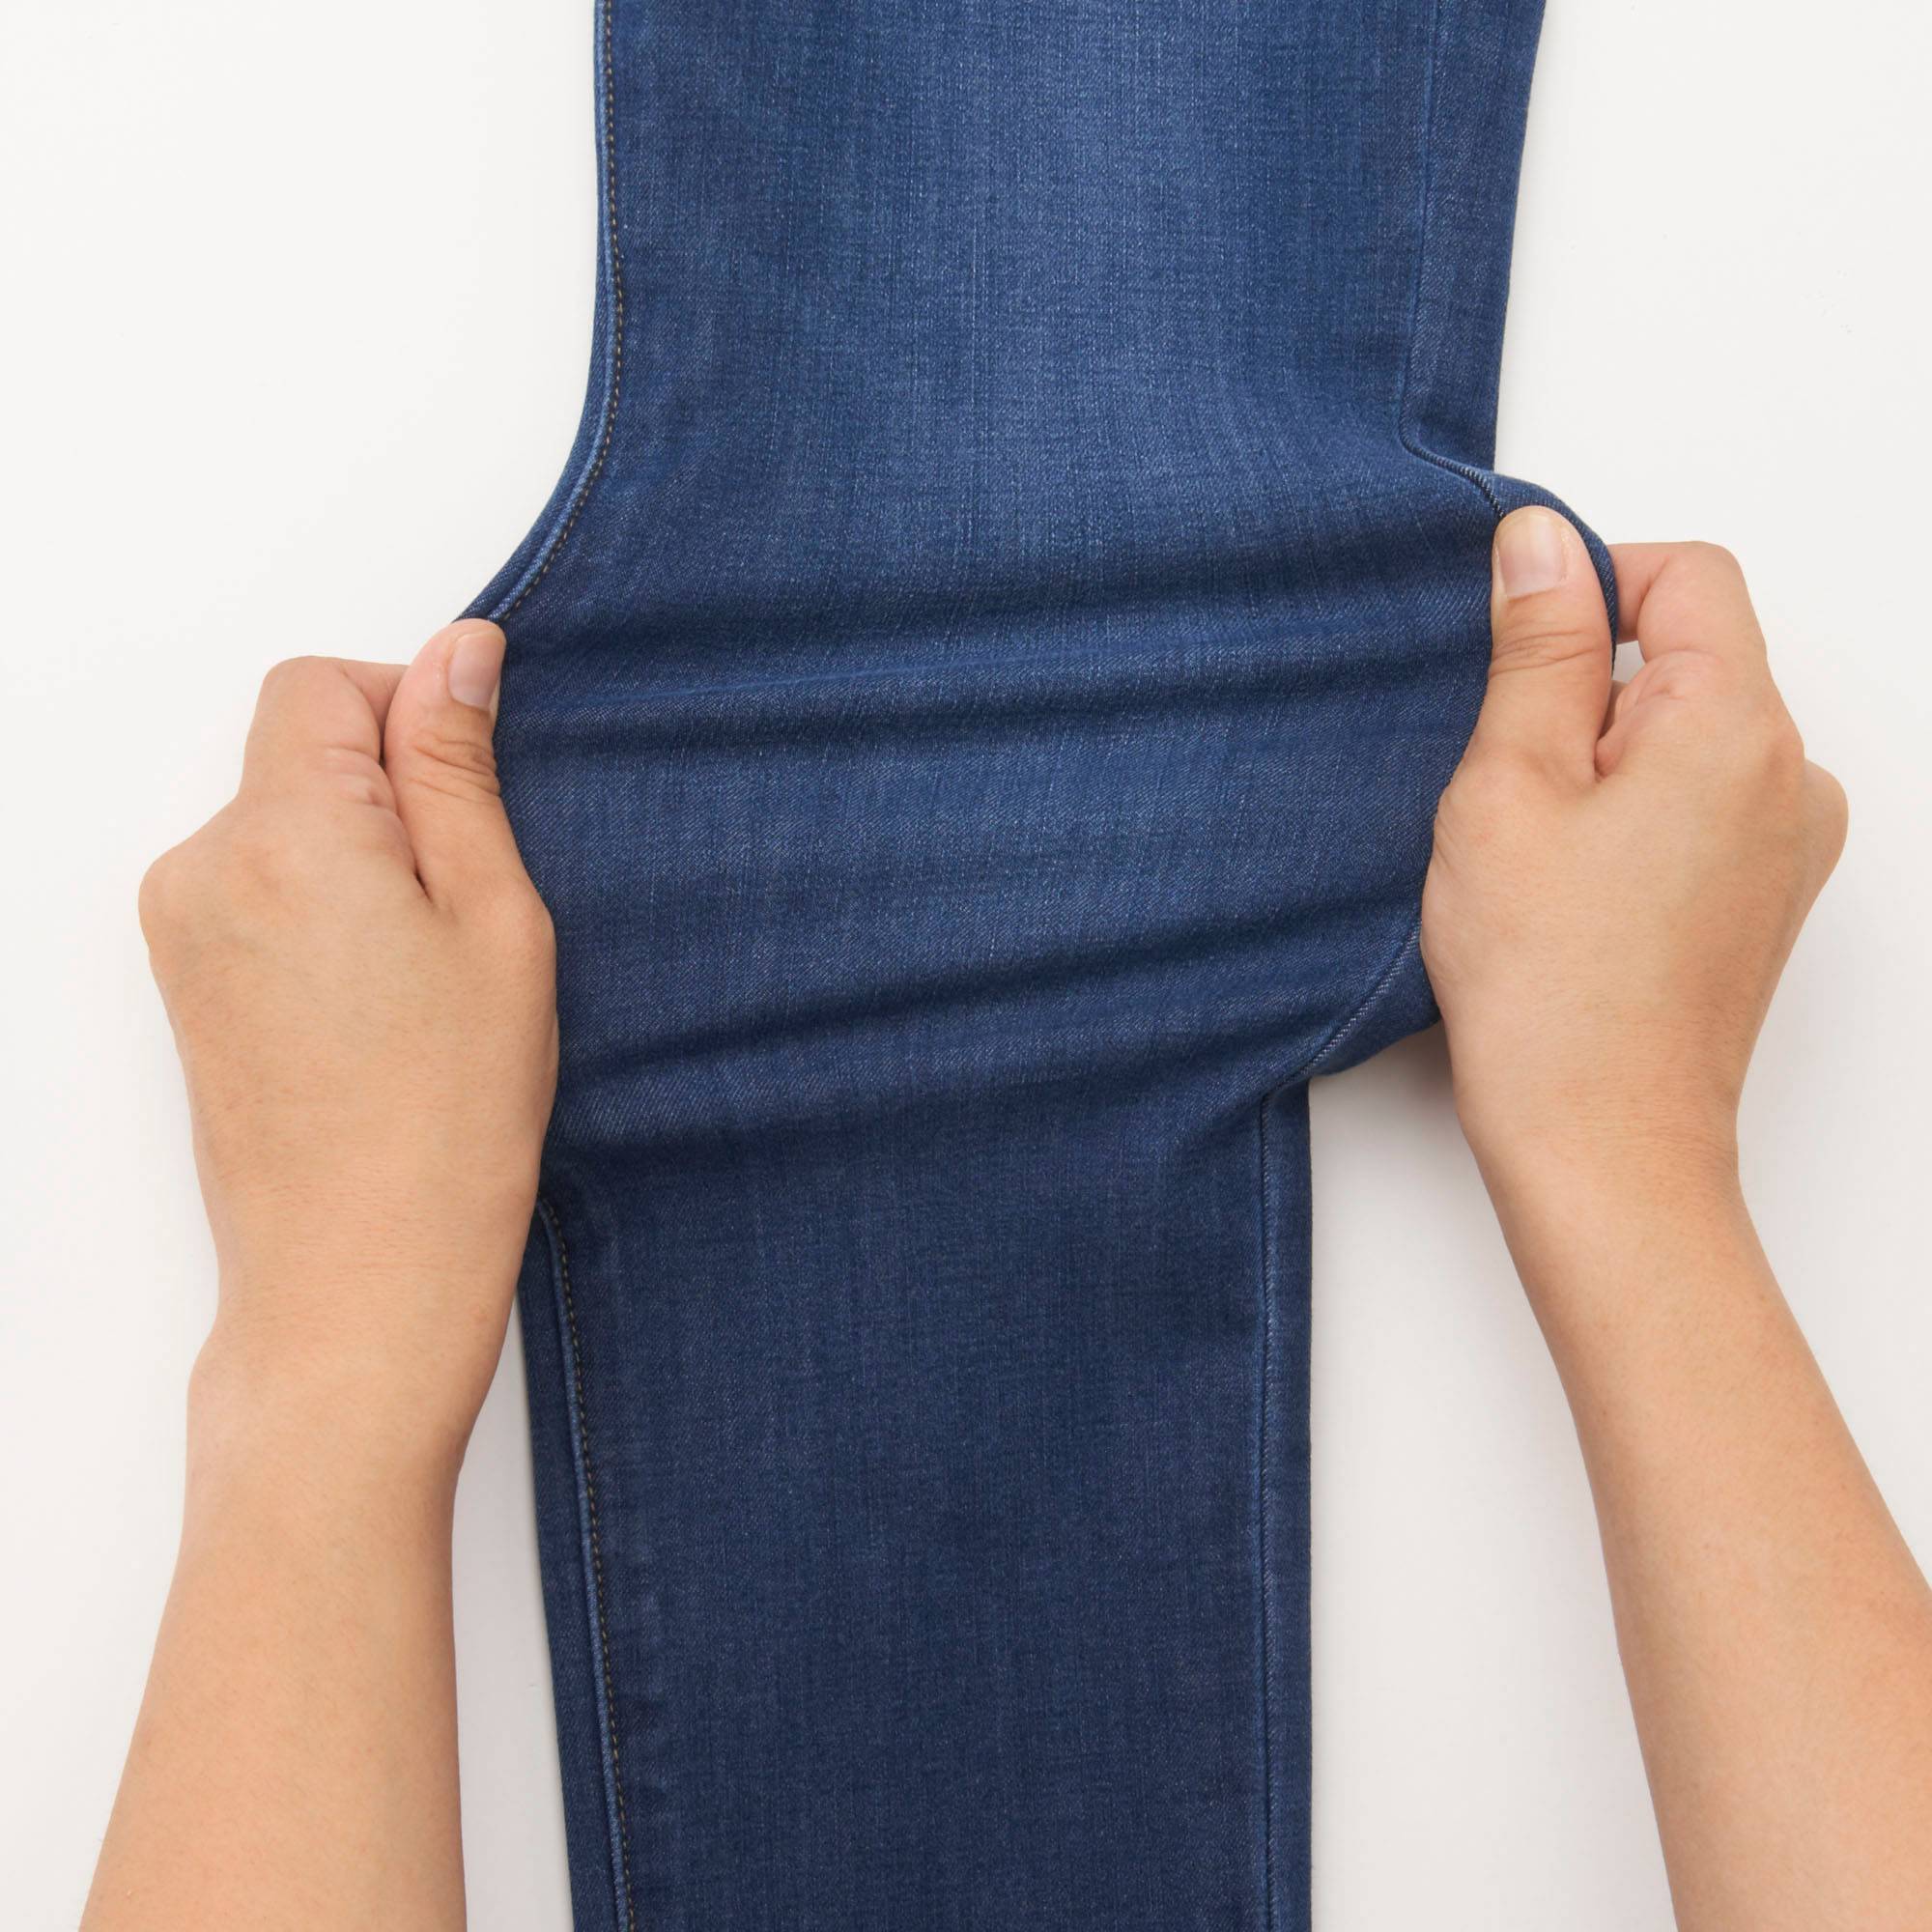 360 degree stretch jeans